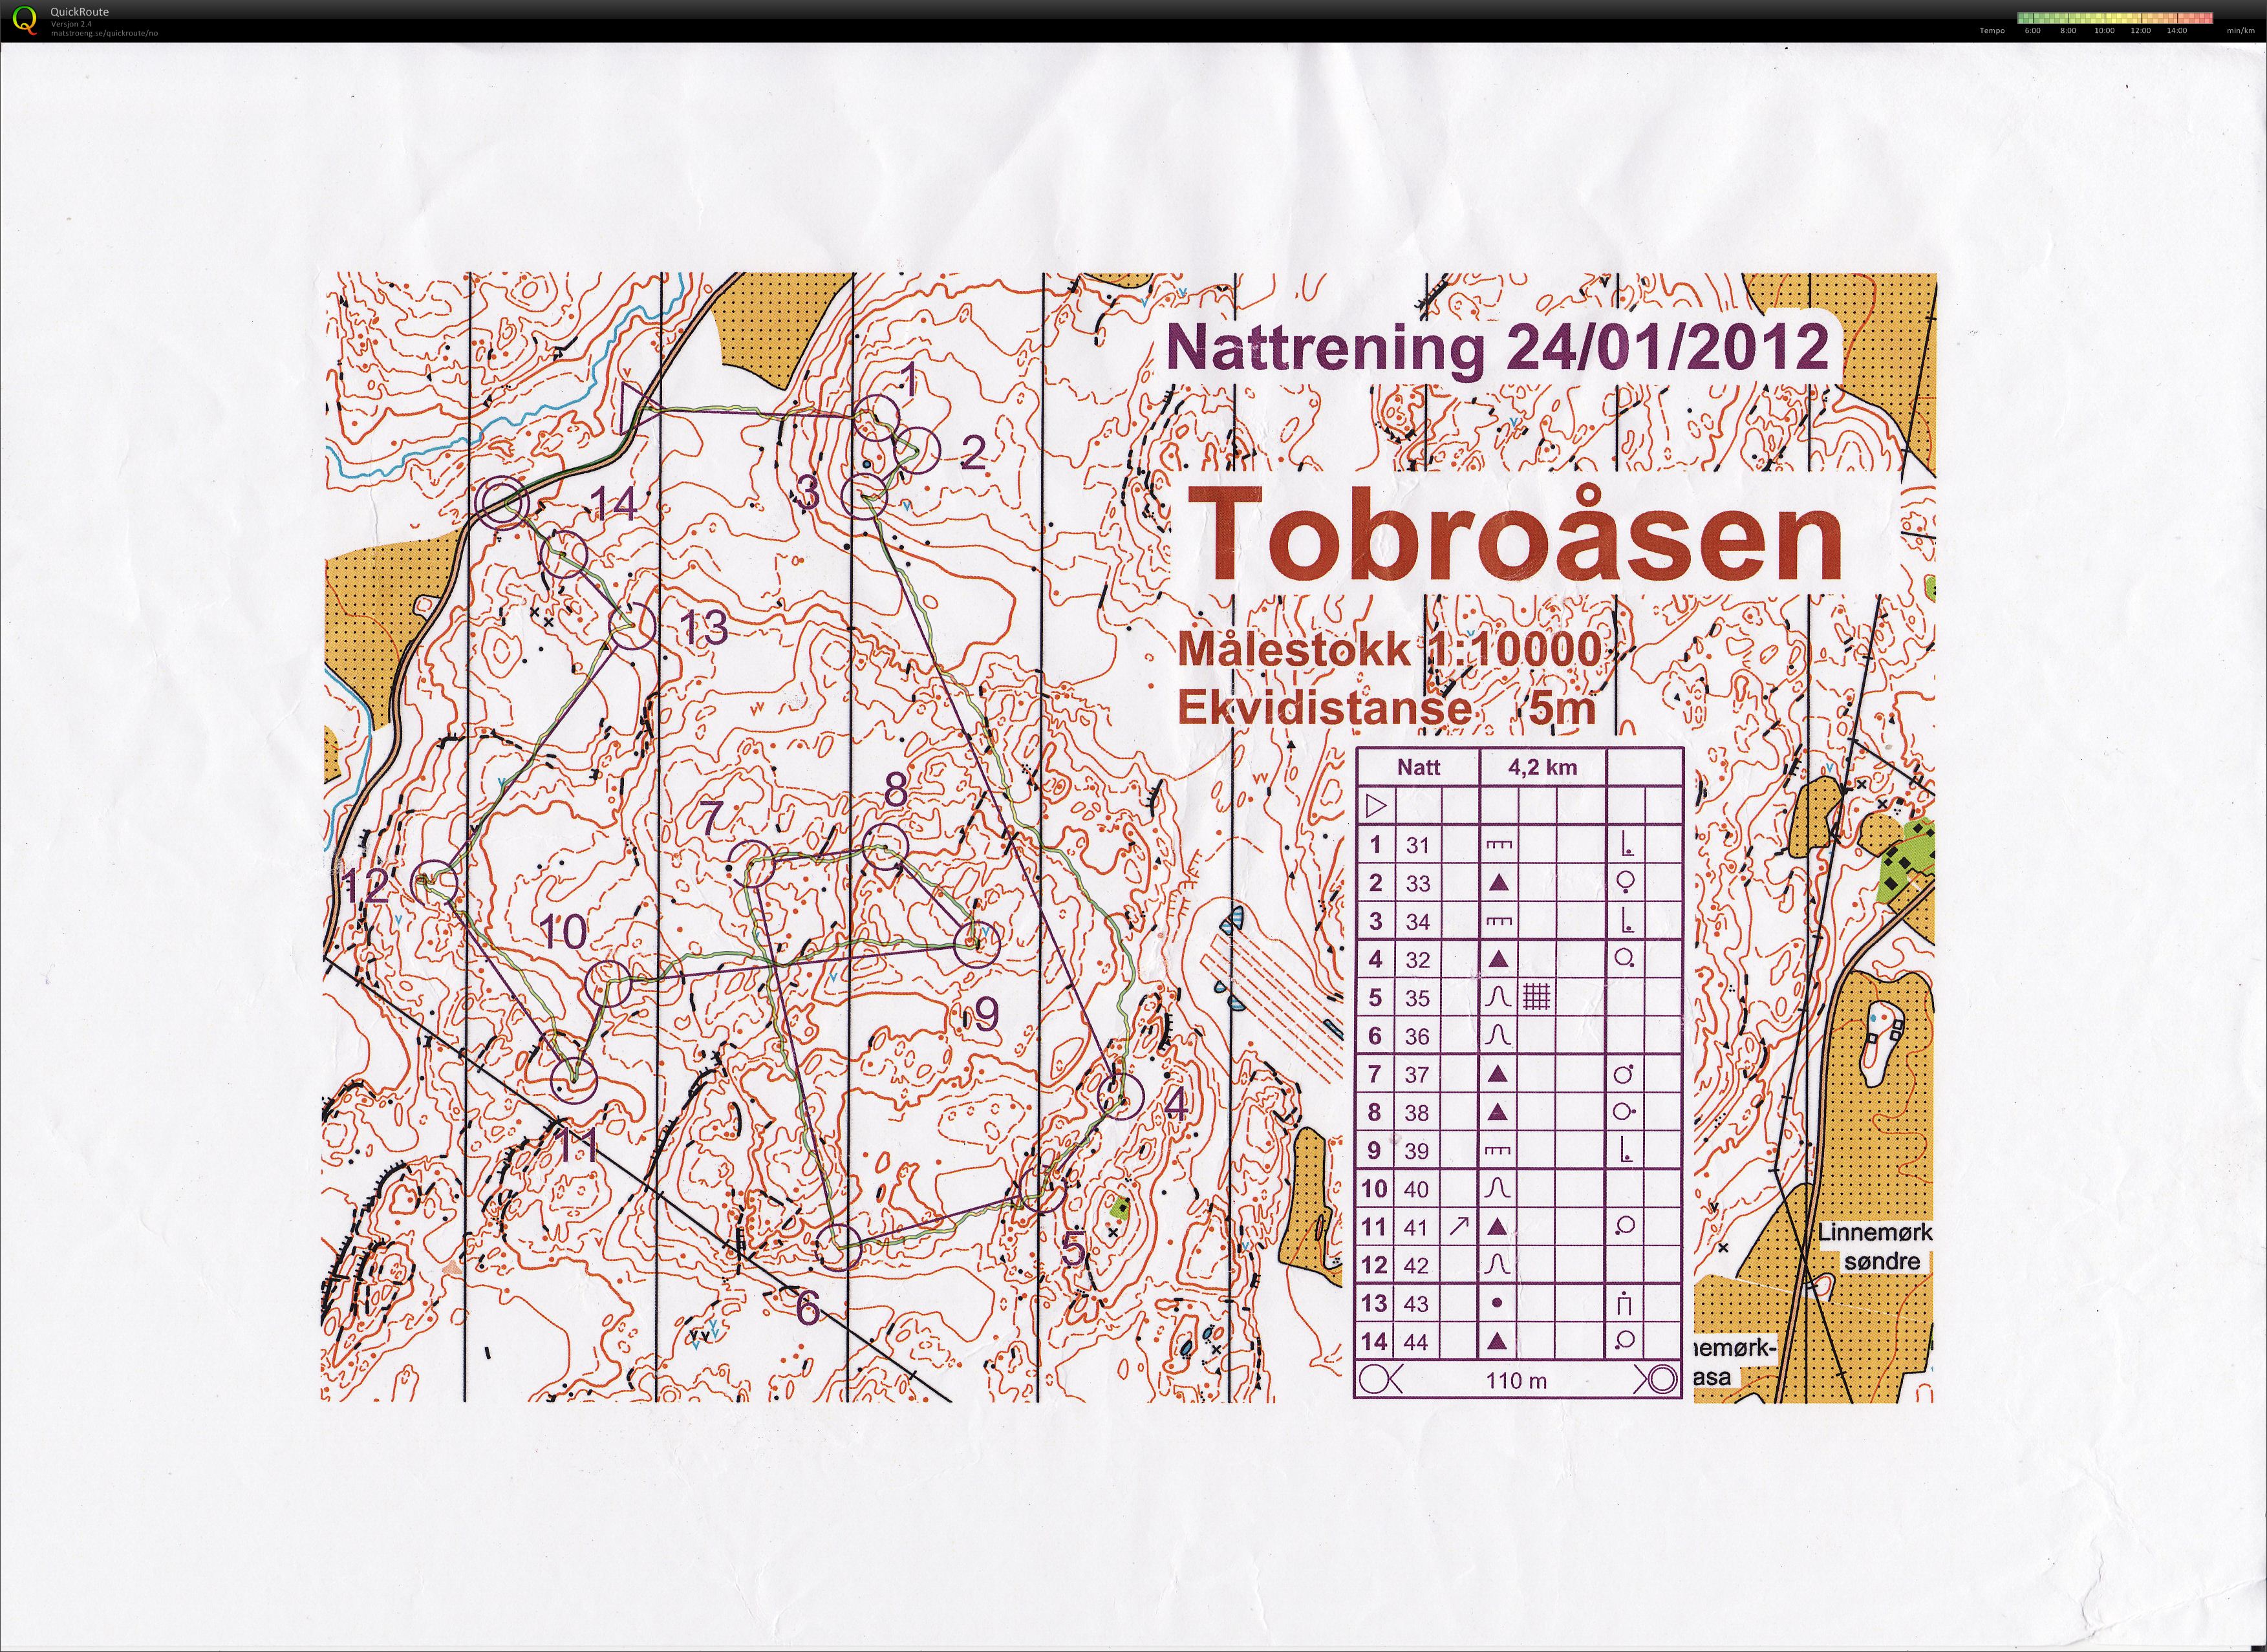 Rolig økt Tobroåsen (2012-02-14)